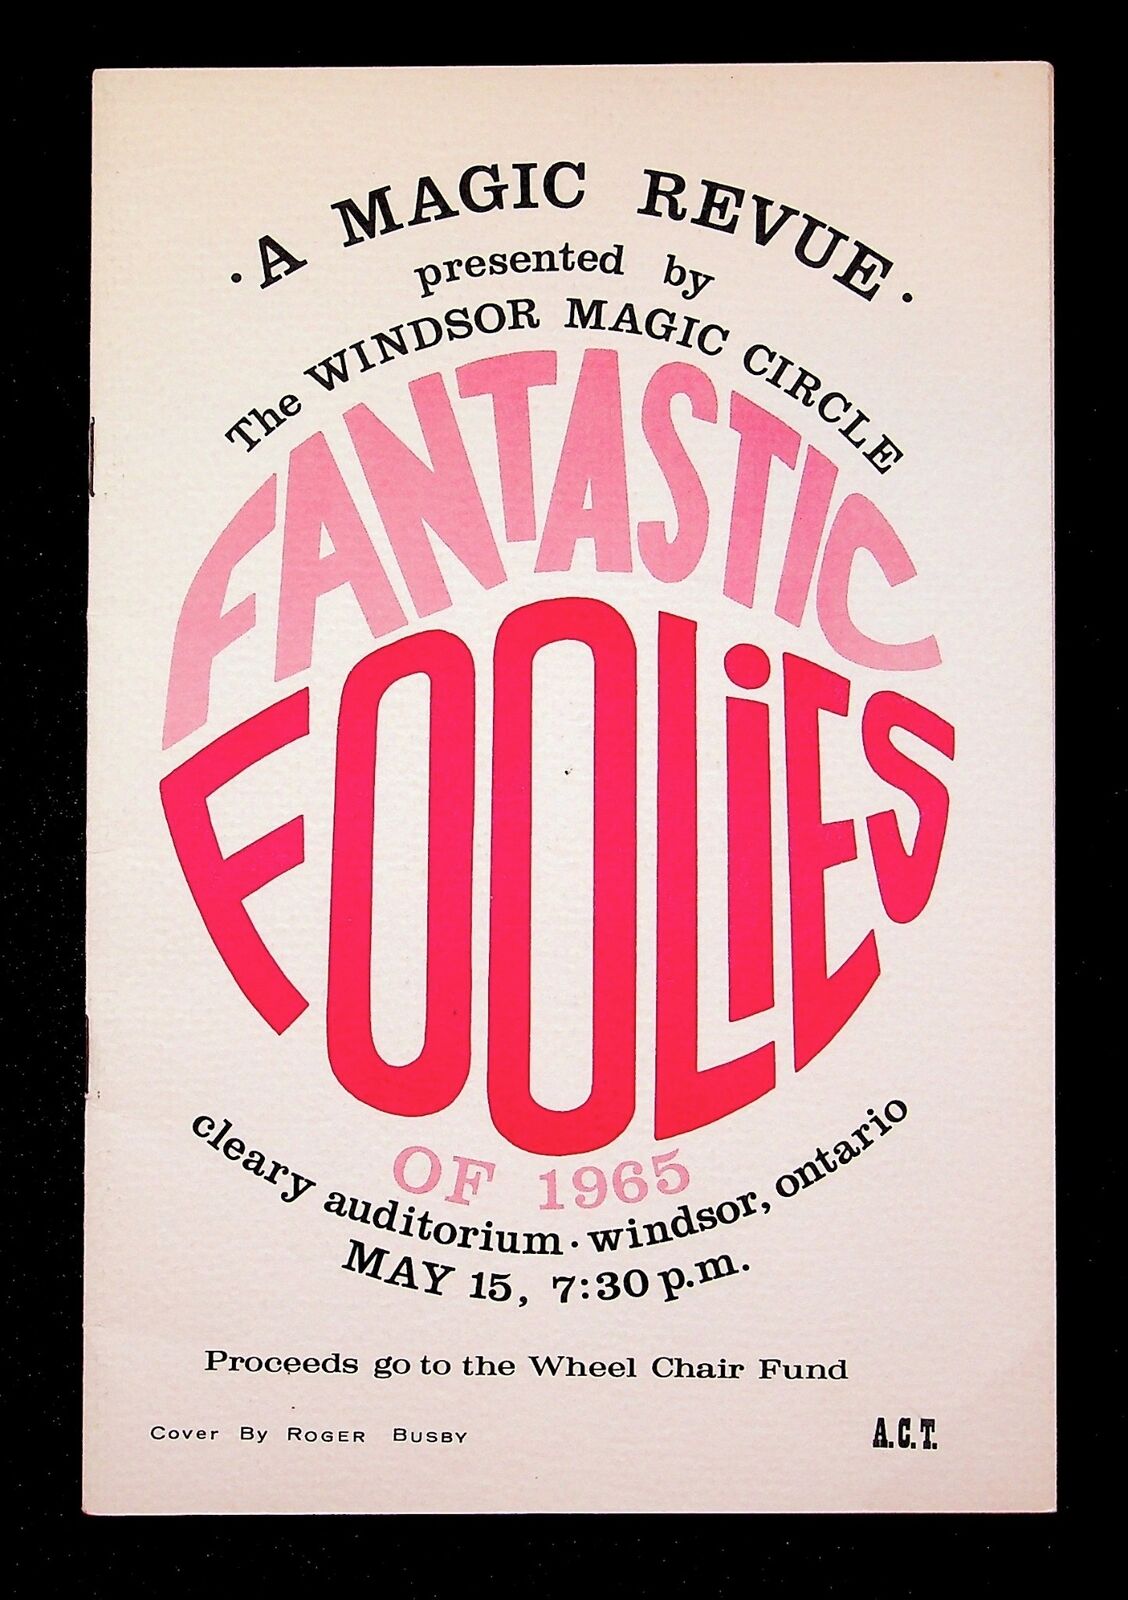 1965 WINDSOR MAGIC CIRCLE Fantastic Follies Convention Program Windsor, Ontario